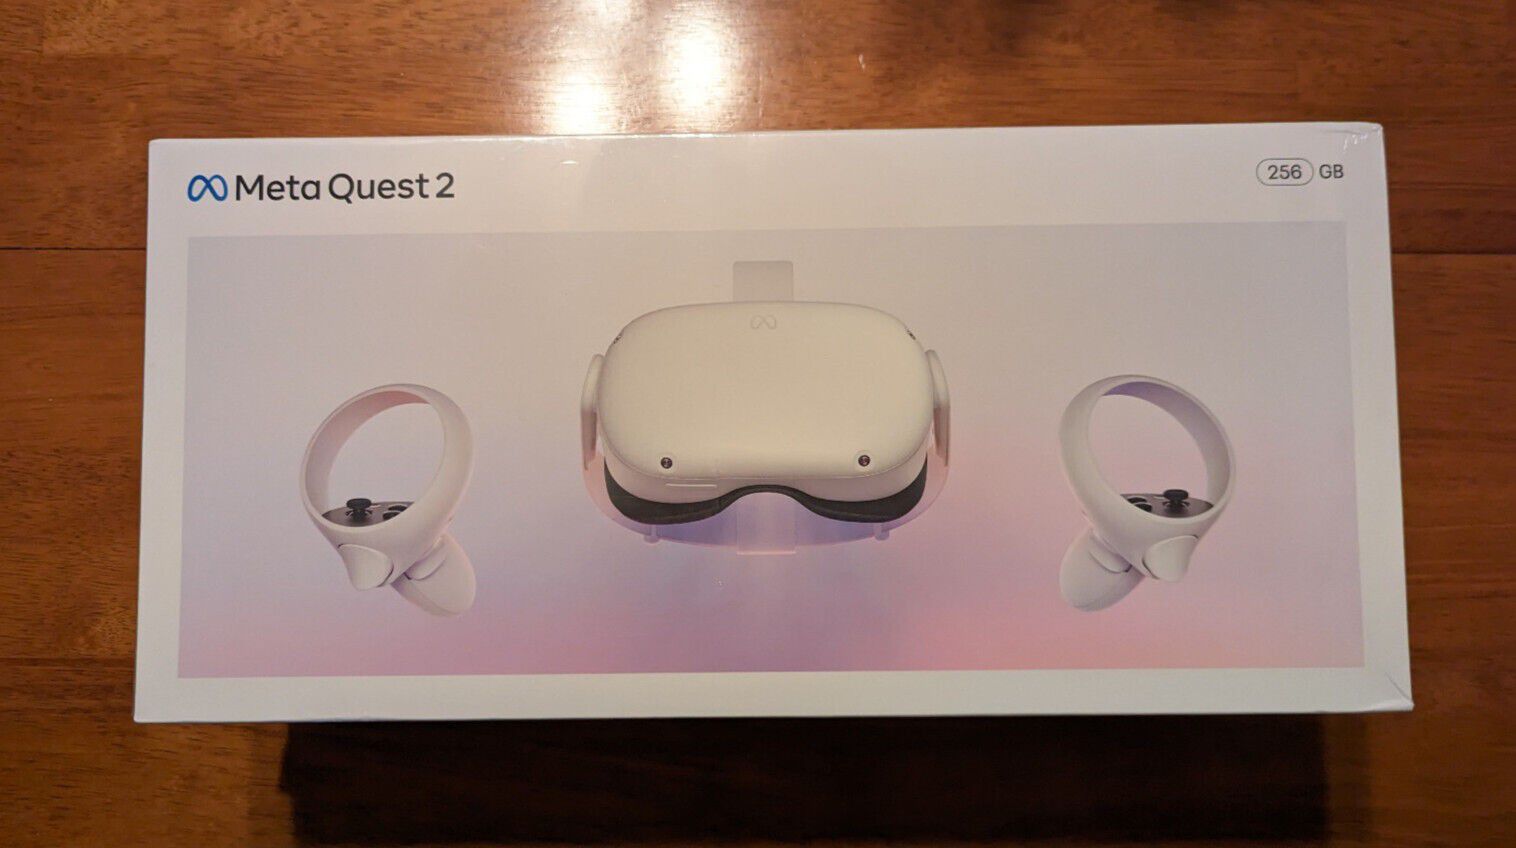 Meta/Oculus Quest 2 - 256GB Storage - Complete, Brand New